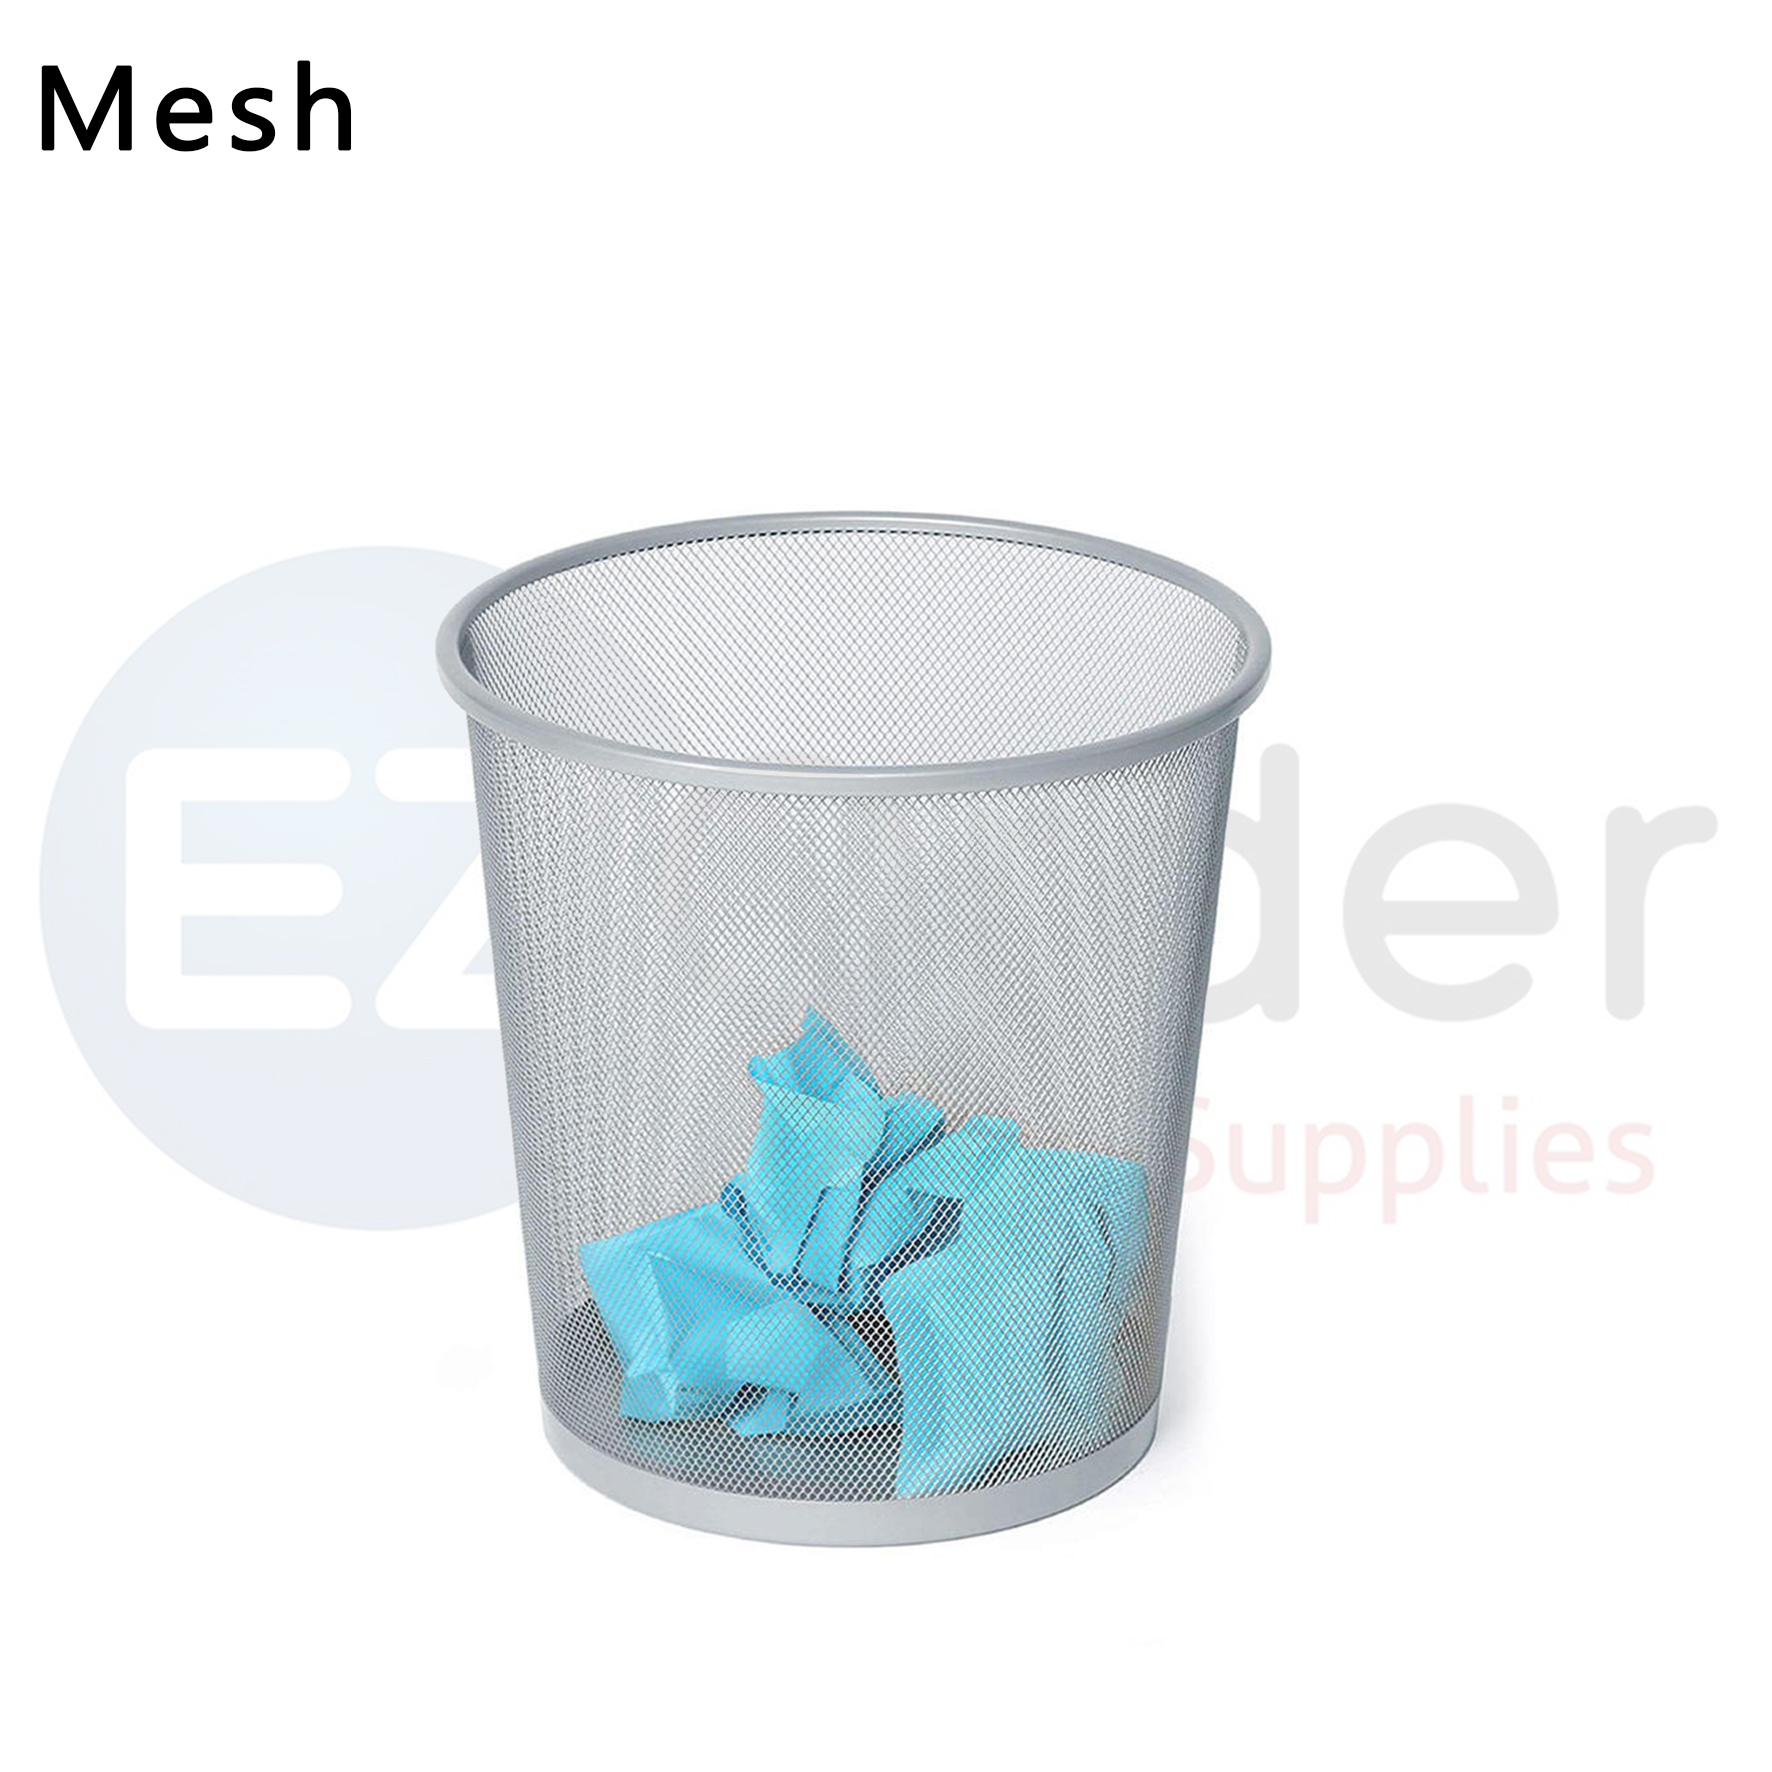 +#Mesh Waste basket round shape,Dia:295mm H:345mm